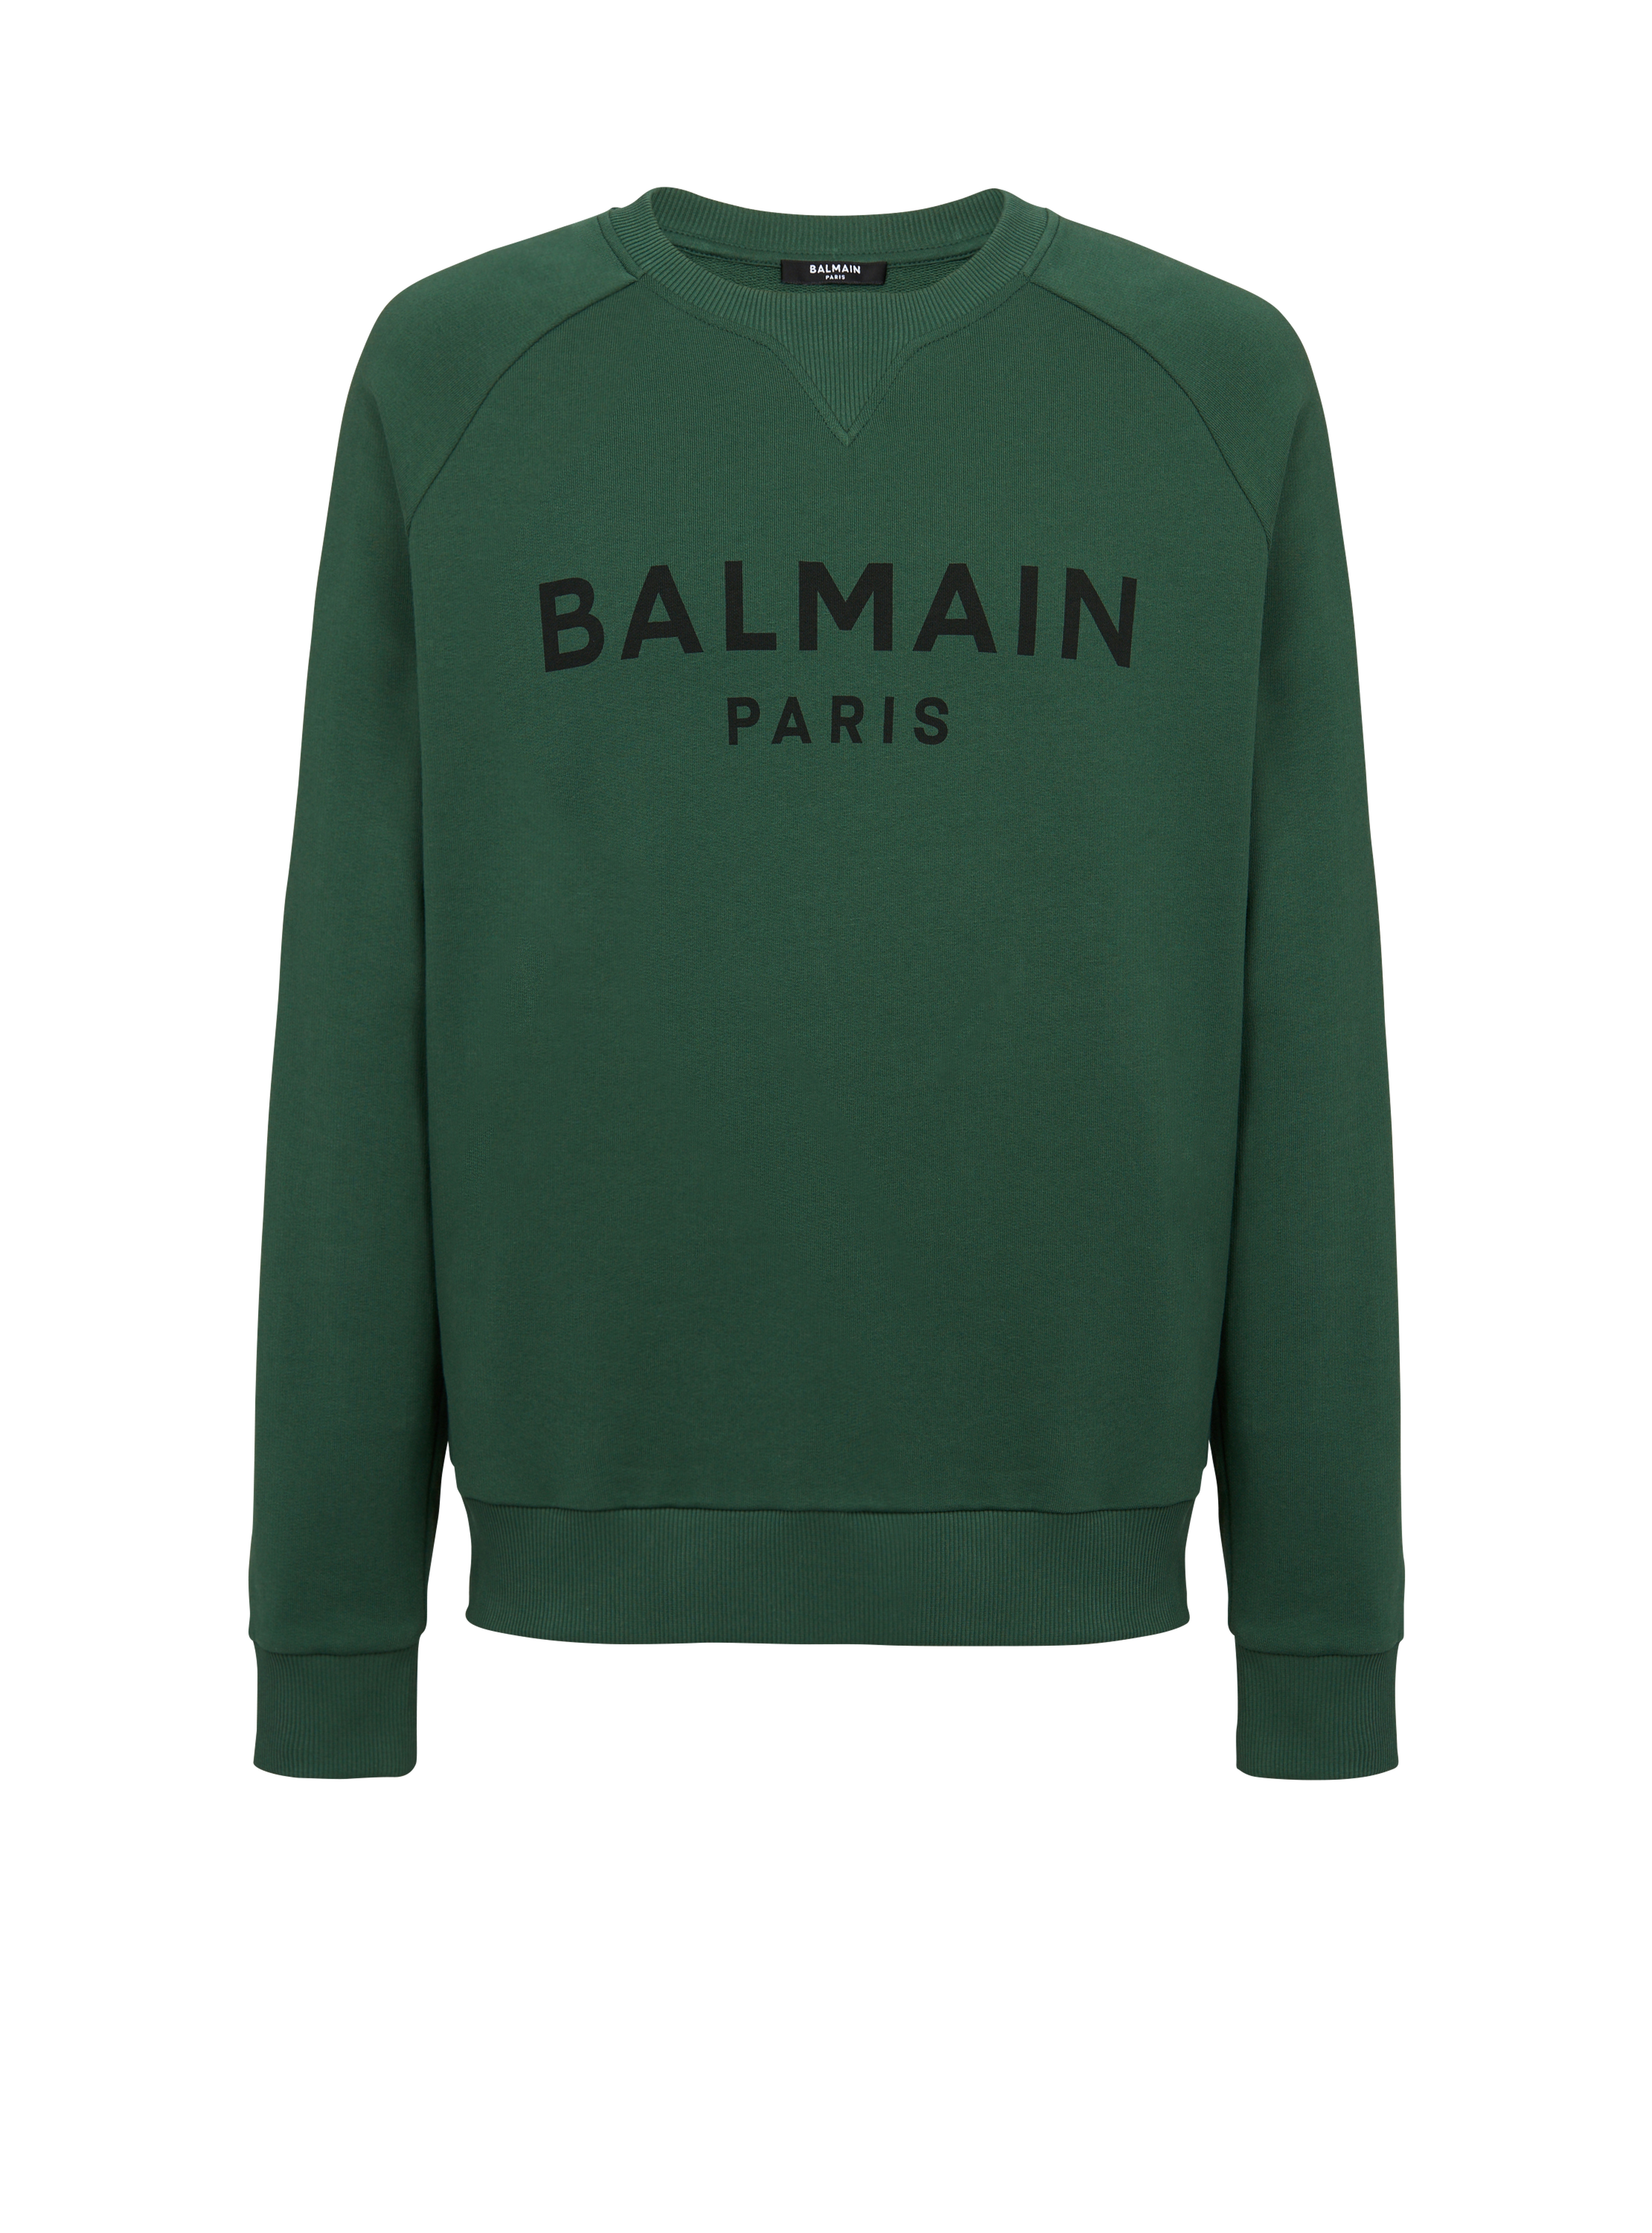 Eco-designed cotton sweatshirt with Balmain Paris metallic logo print, green